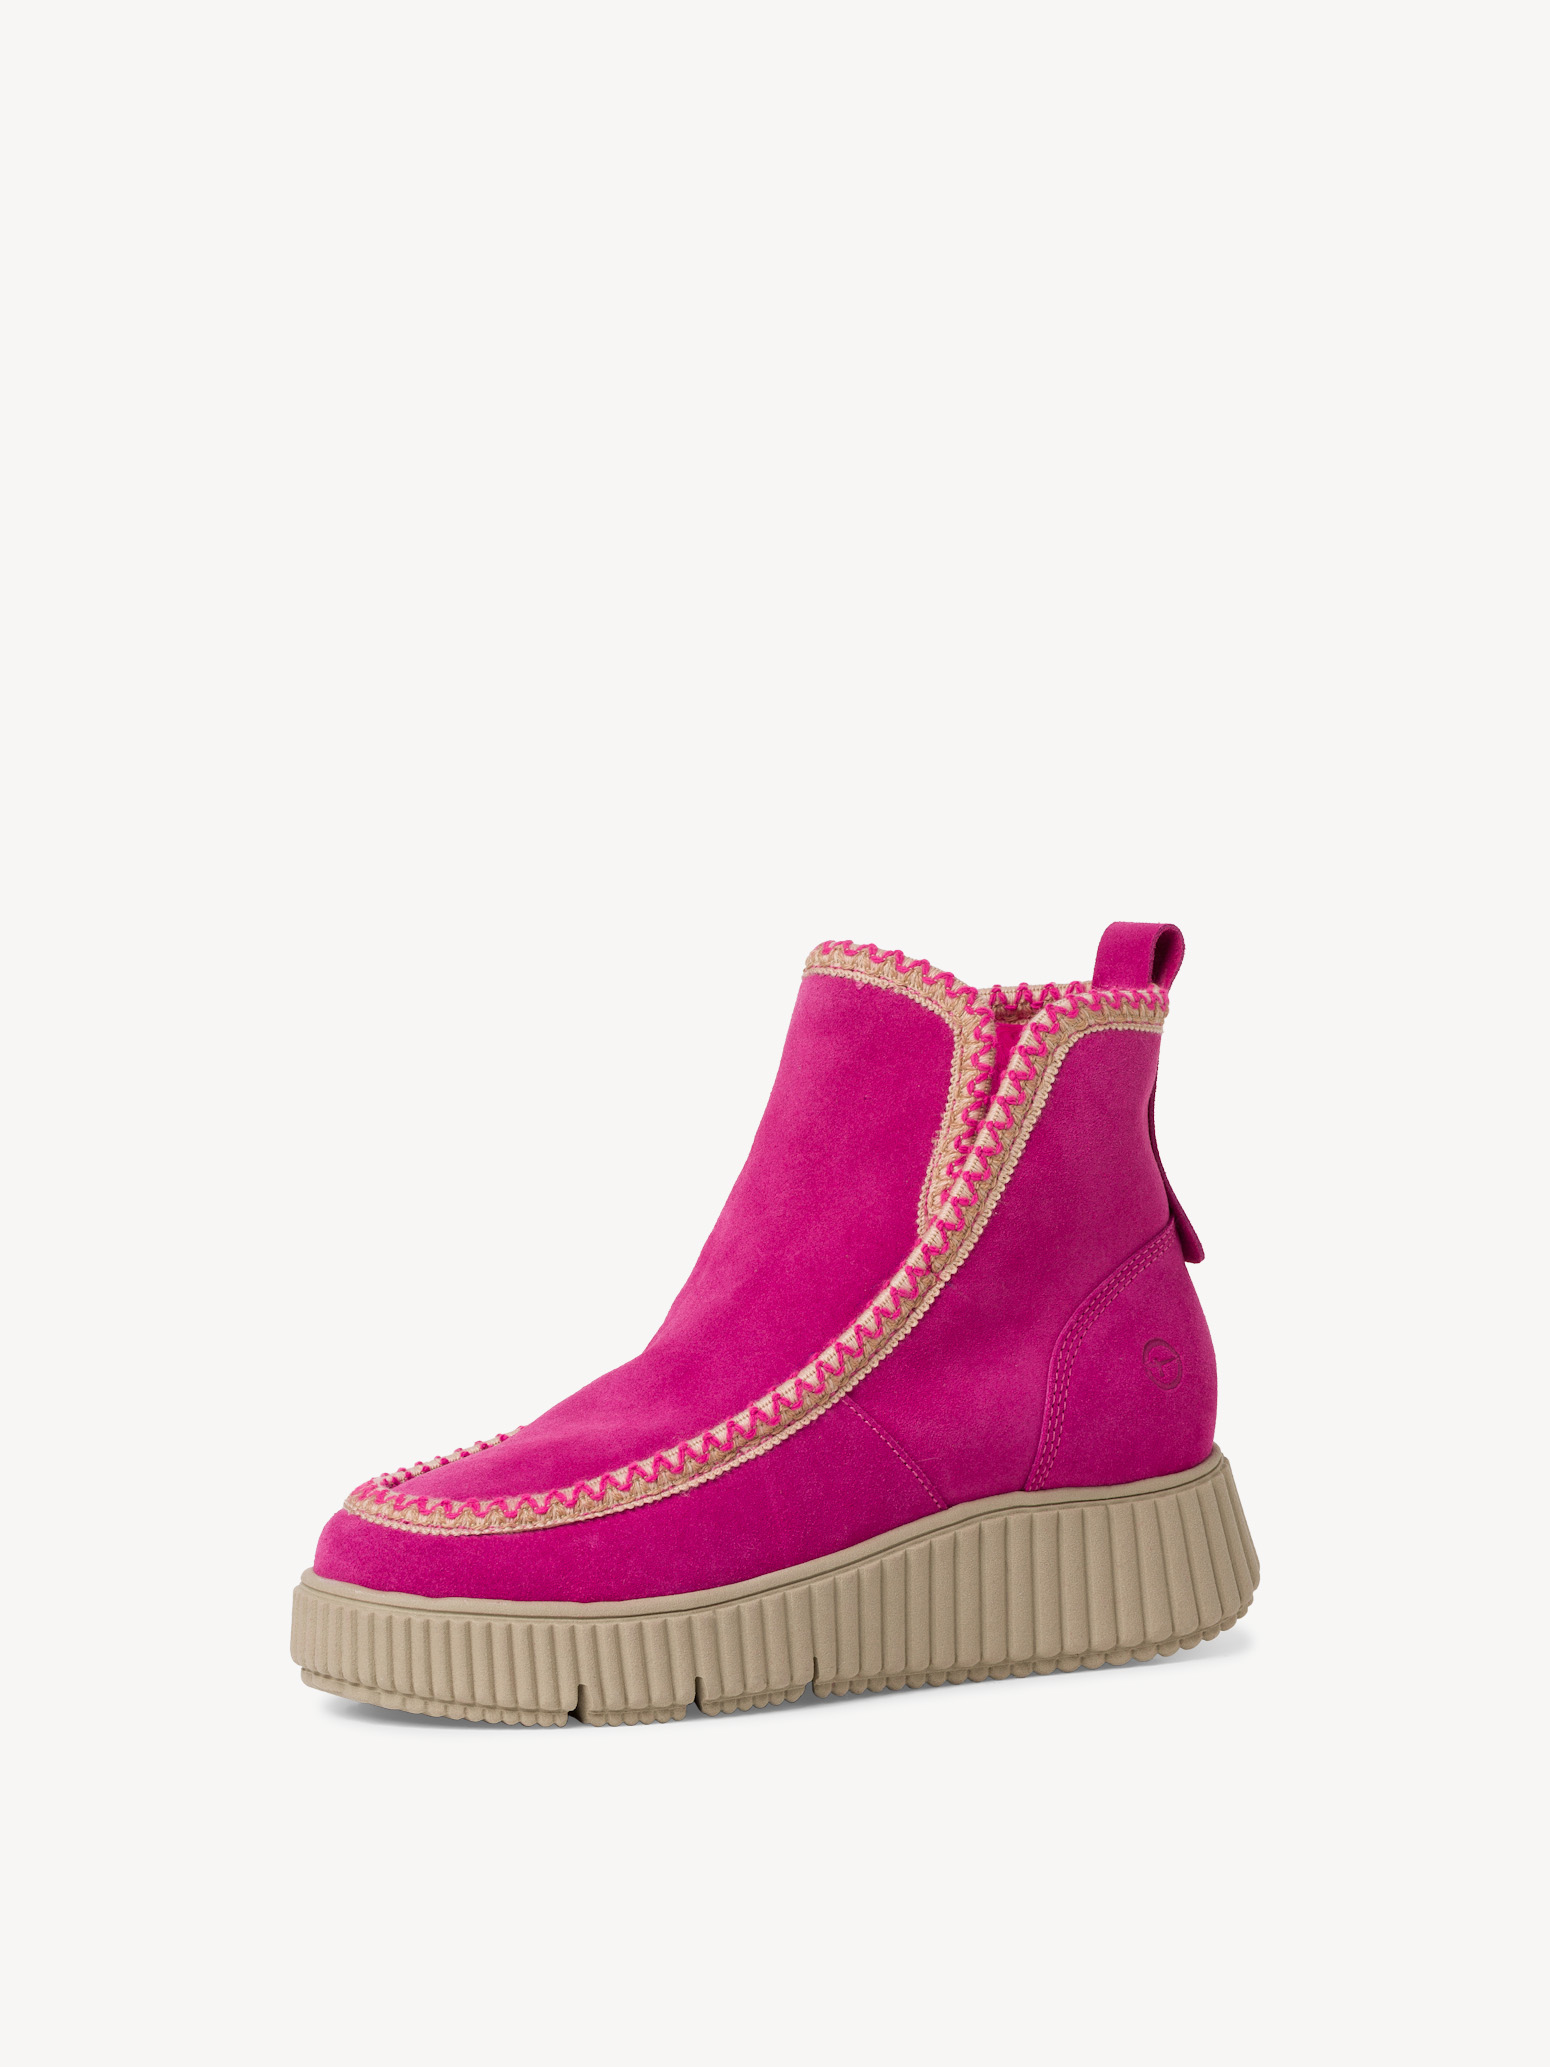 kaufen! 1-26865-41-513: Lederstiefelette online Tamaris & pink Boots Stiefeletten - Warmfutter